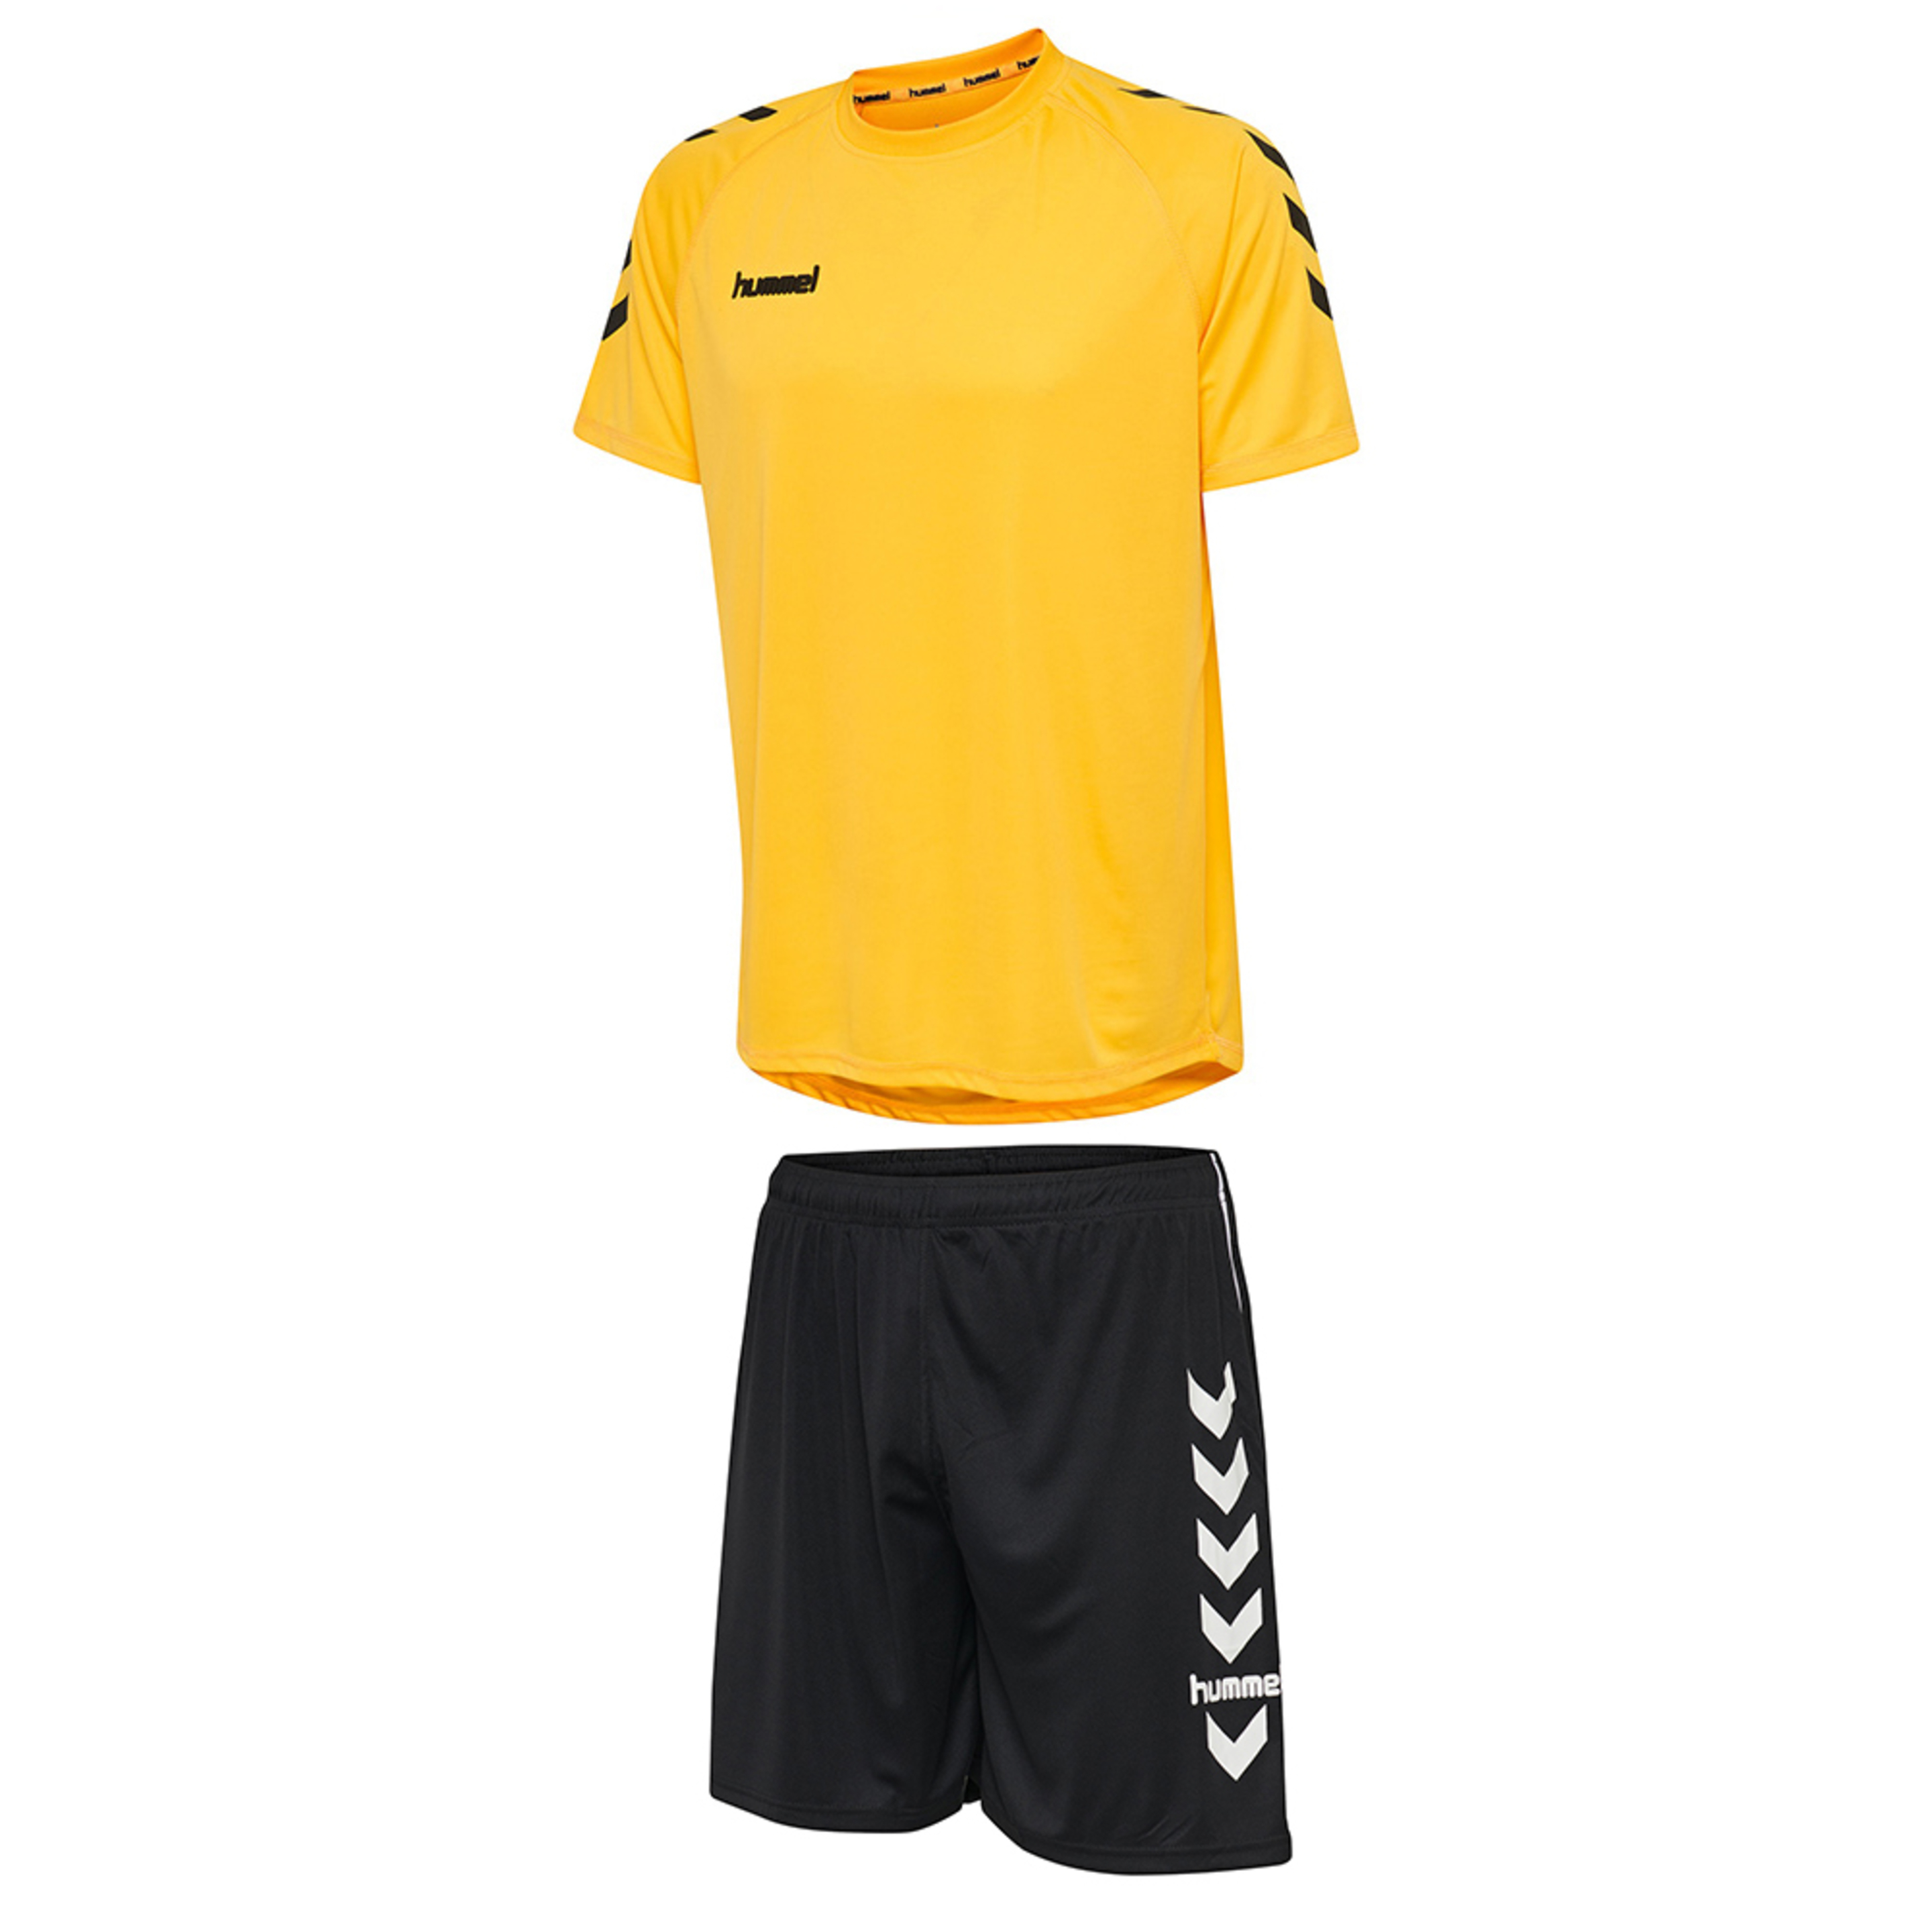 Equipación Hummel Futbol - amarillo-negro - 